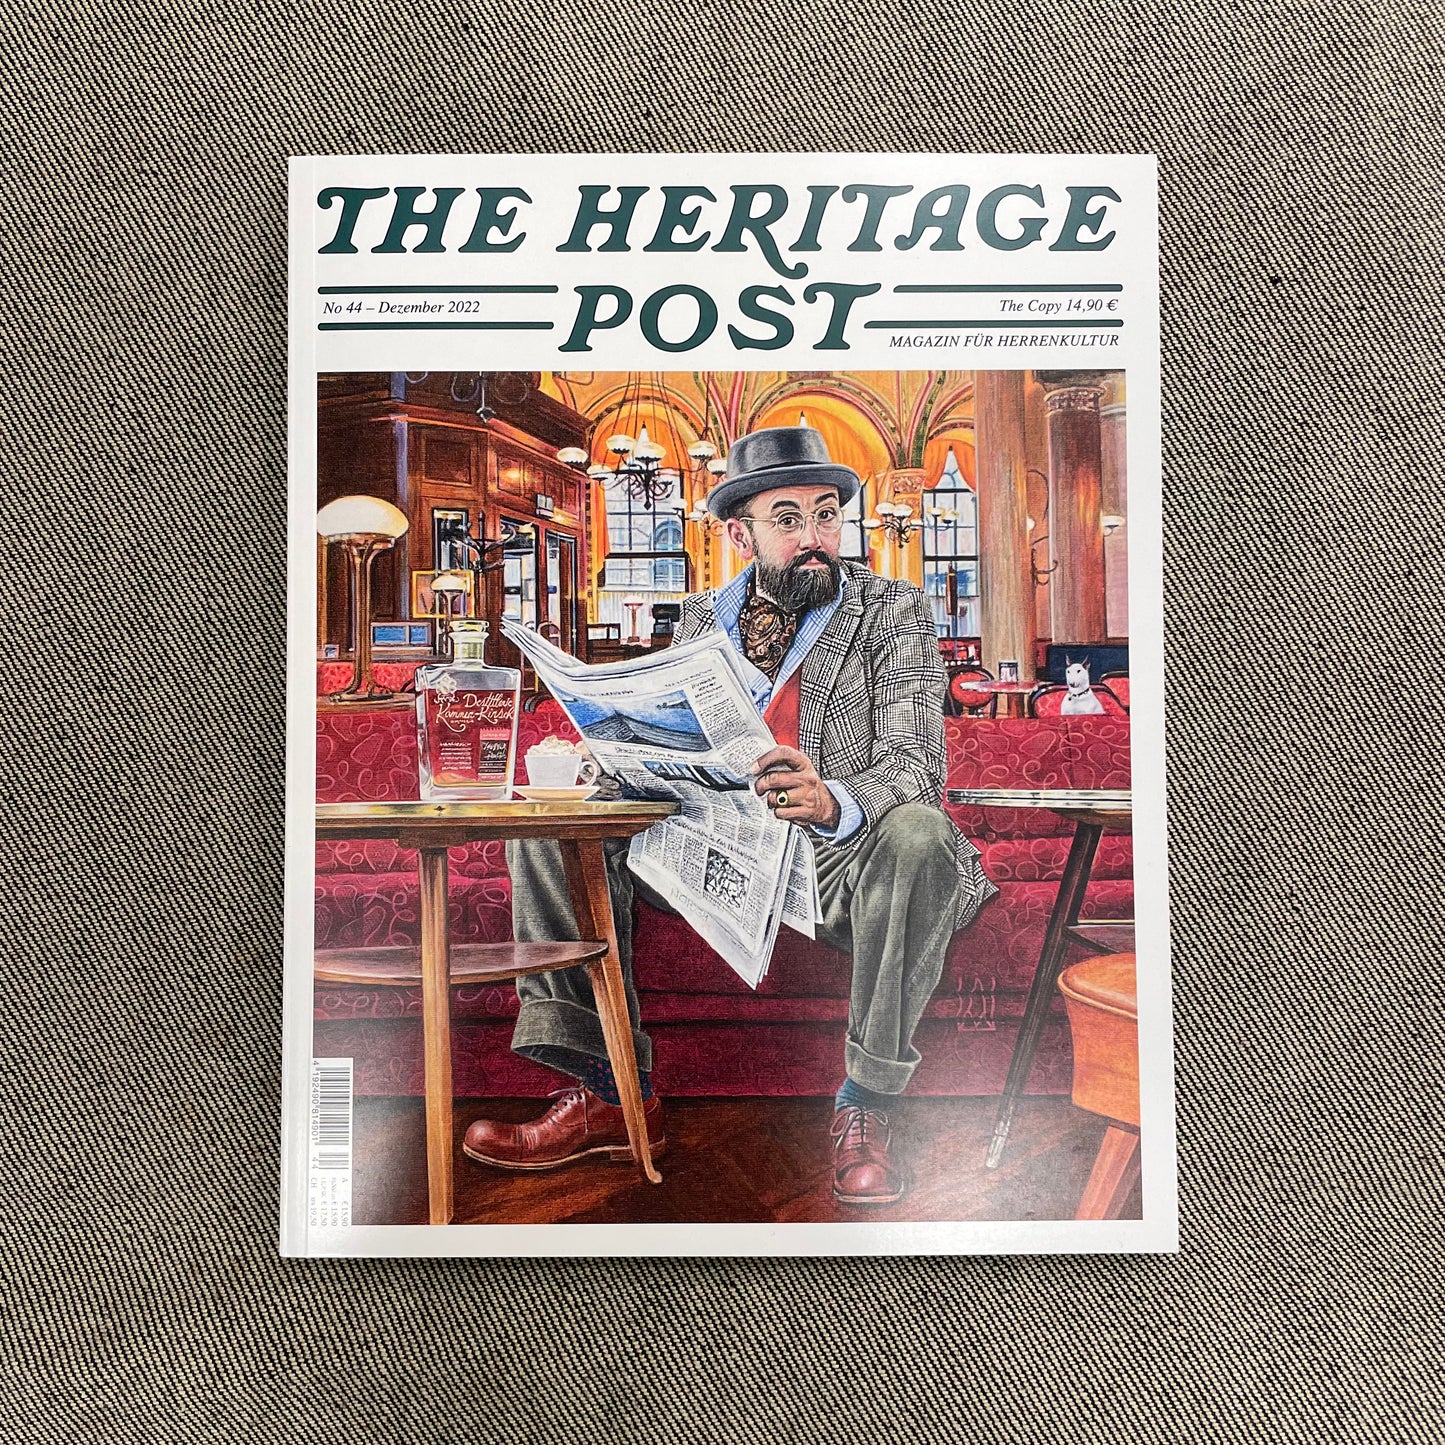 The Heritage Post - vol 44